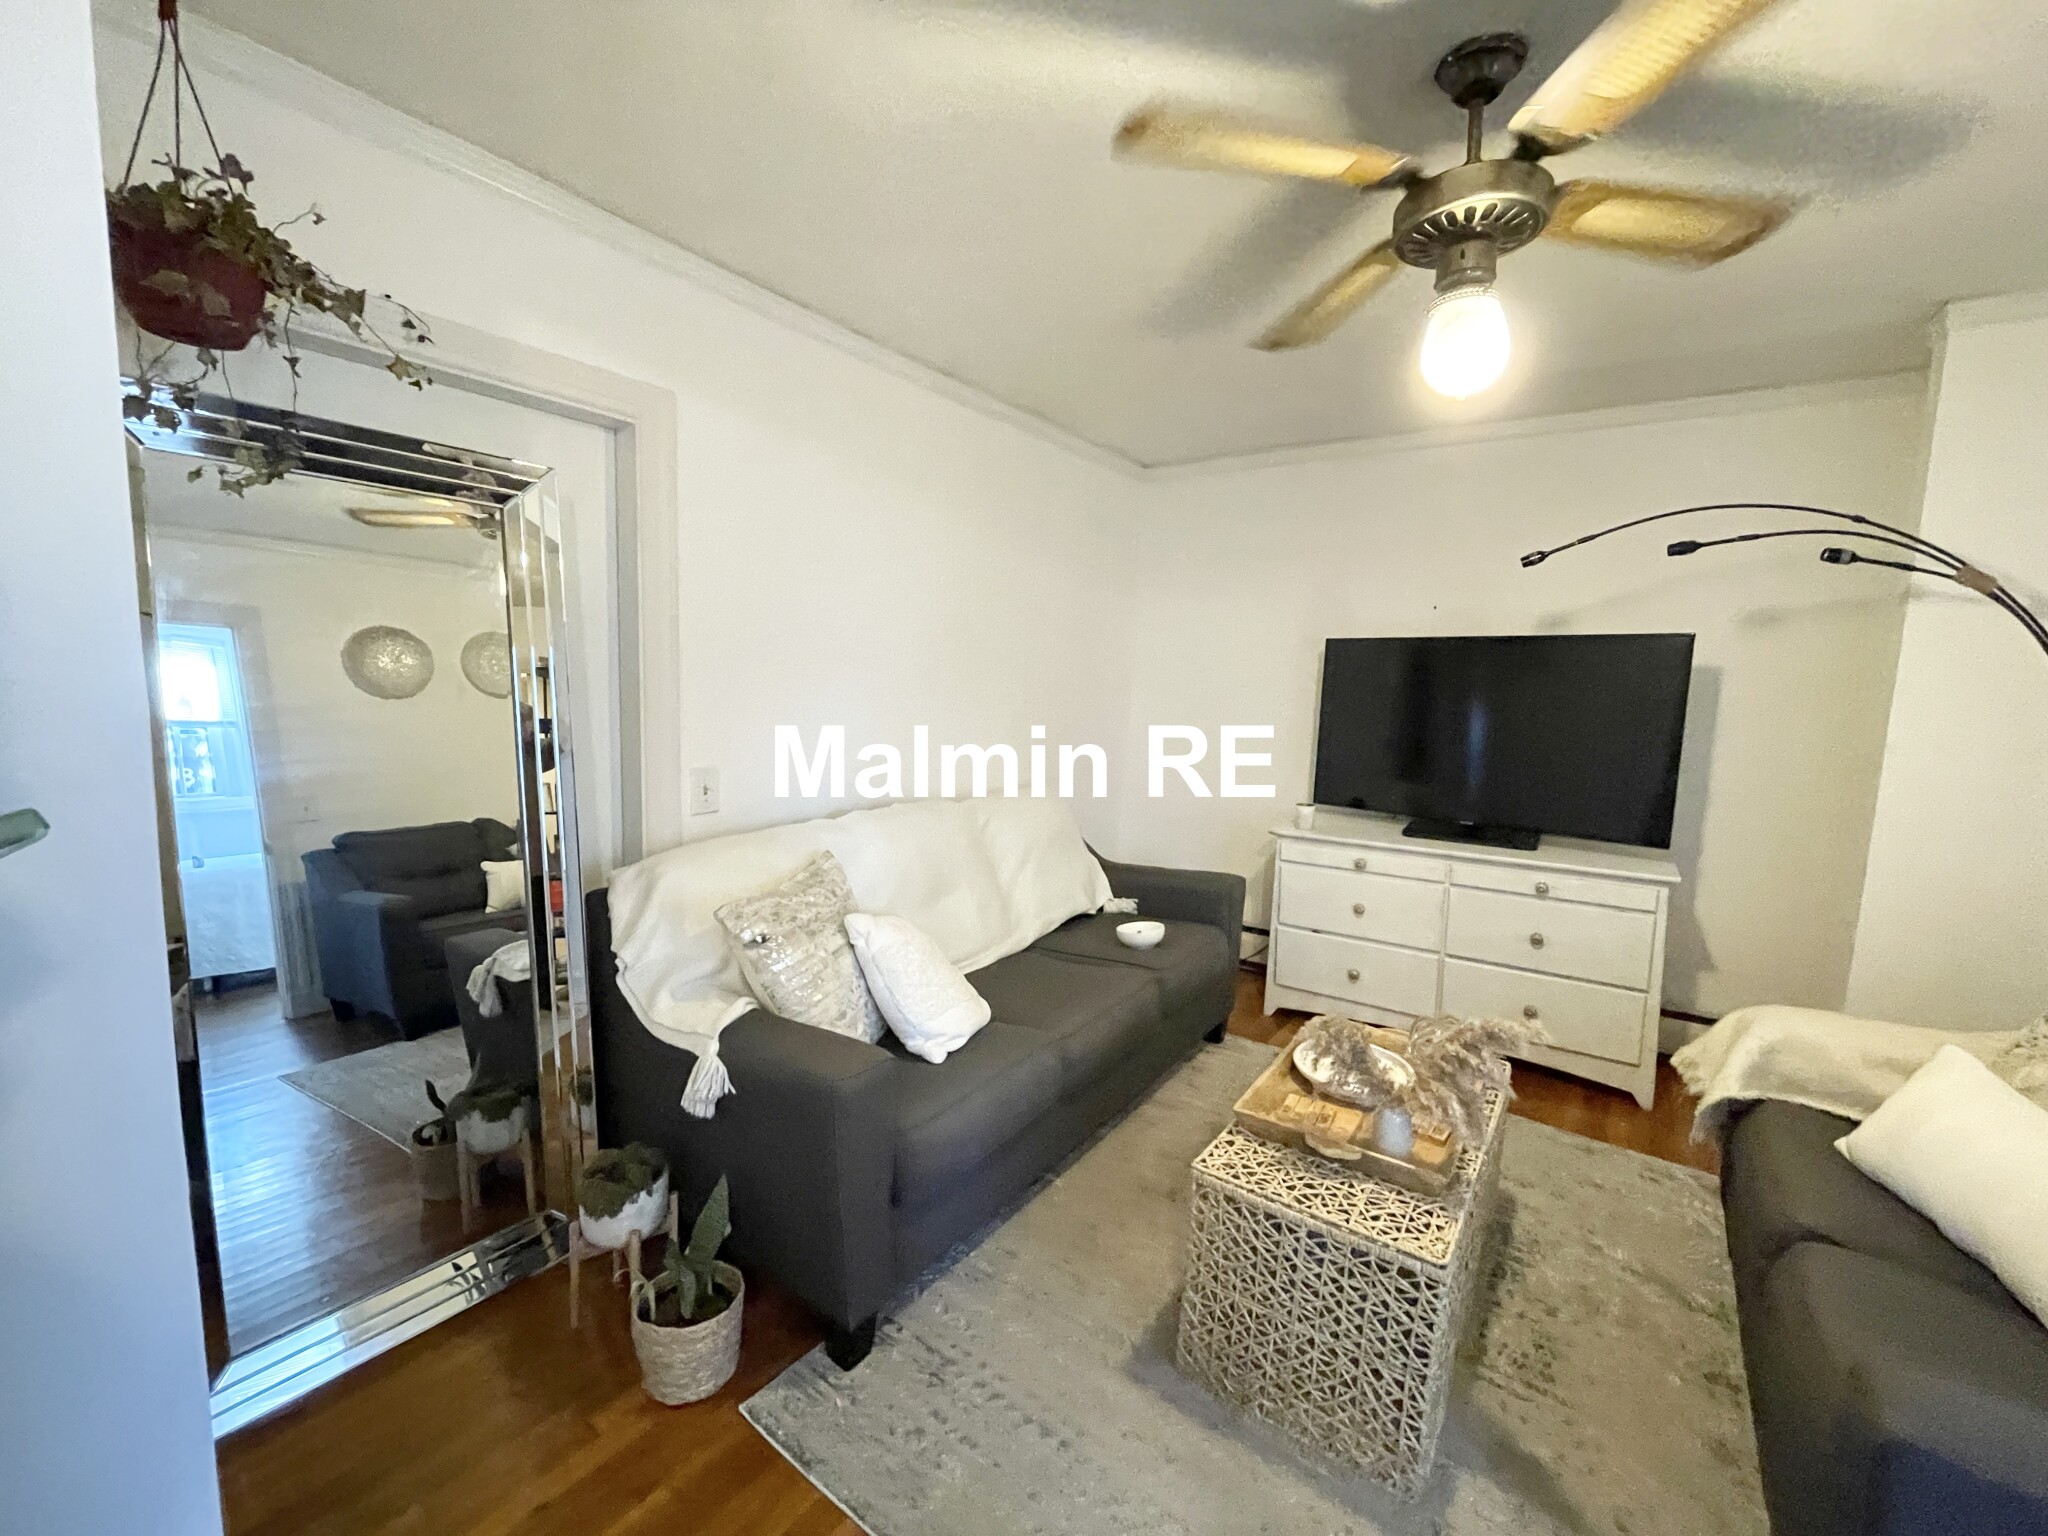 Photos of apartment on D St.,Boston MA 02127